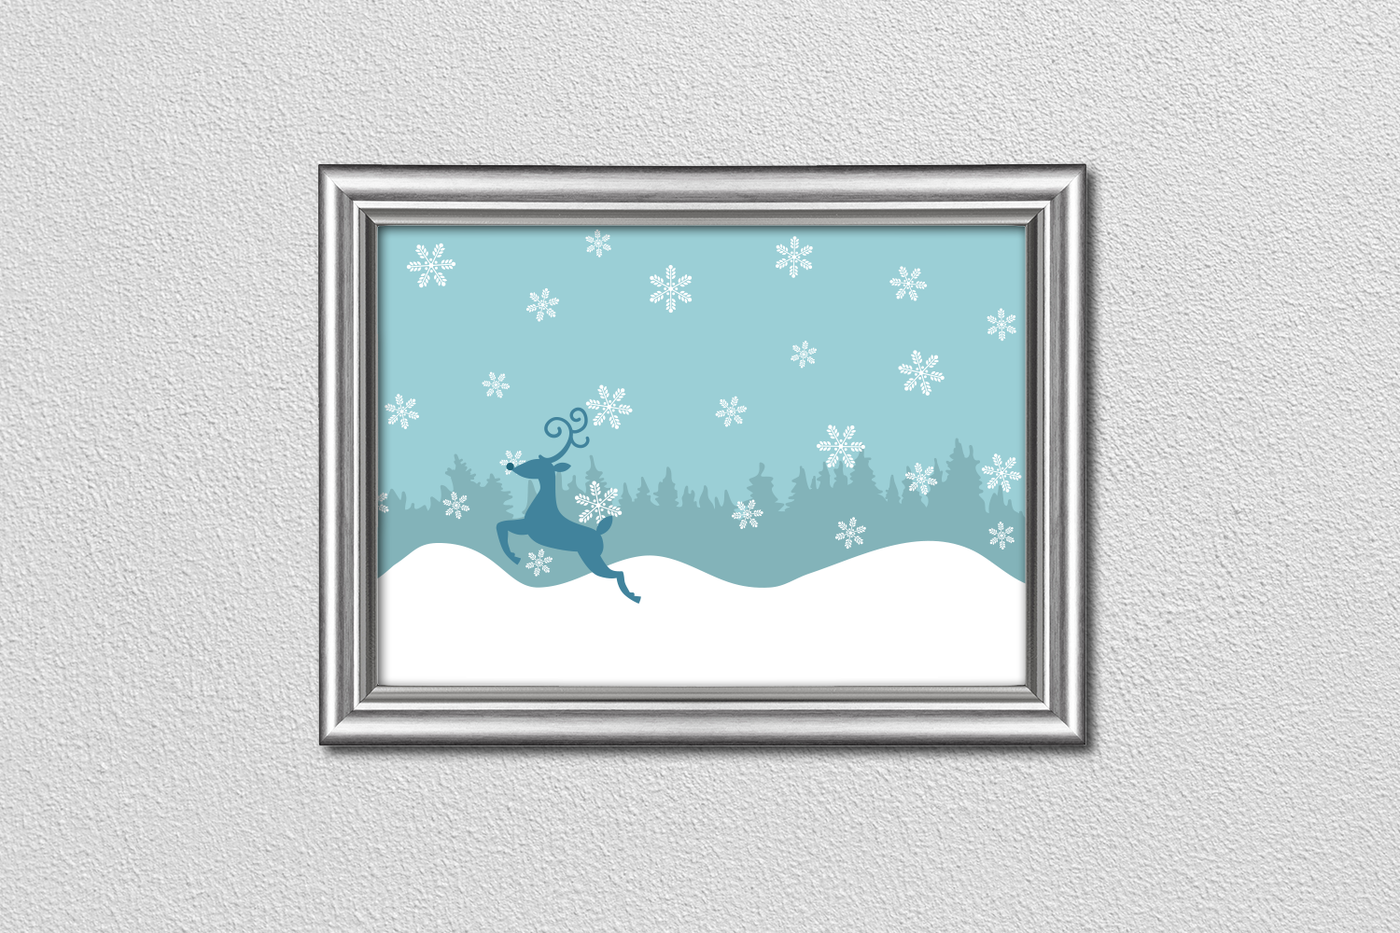 Winter scene design with a reindeer